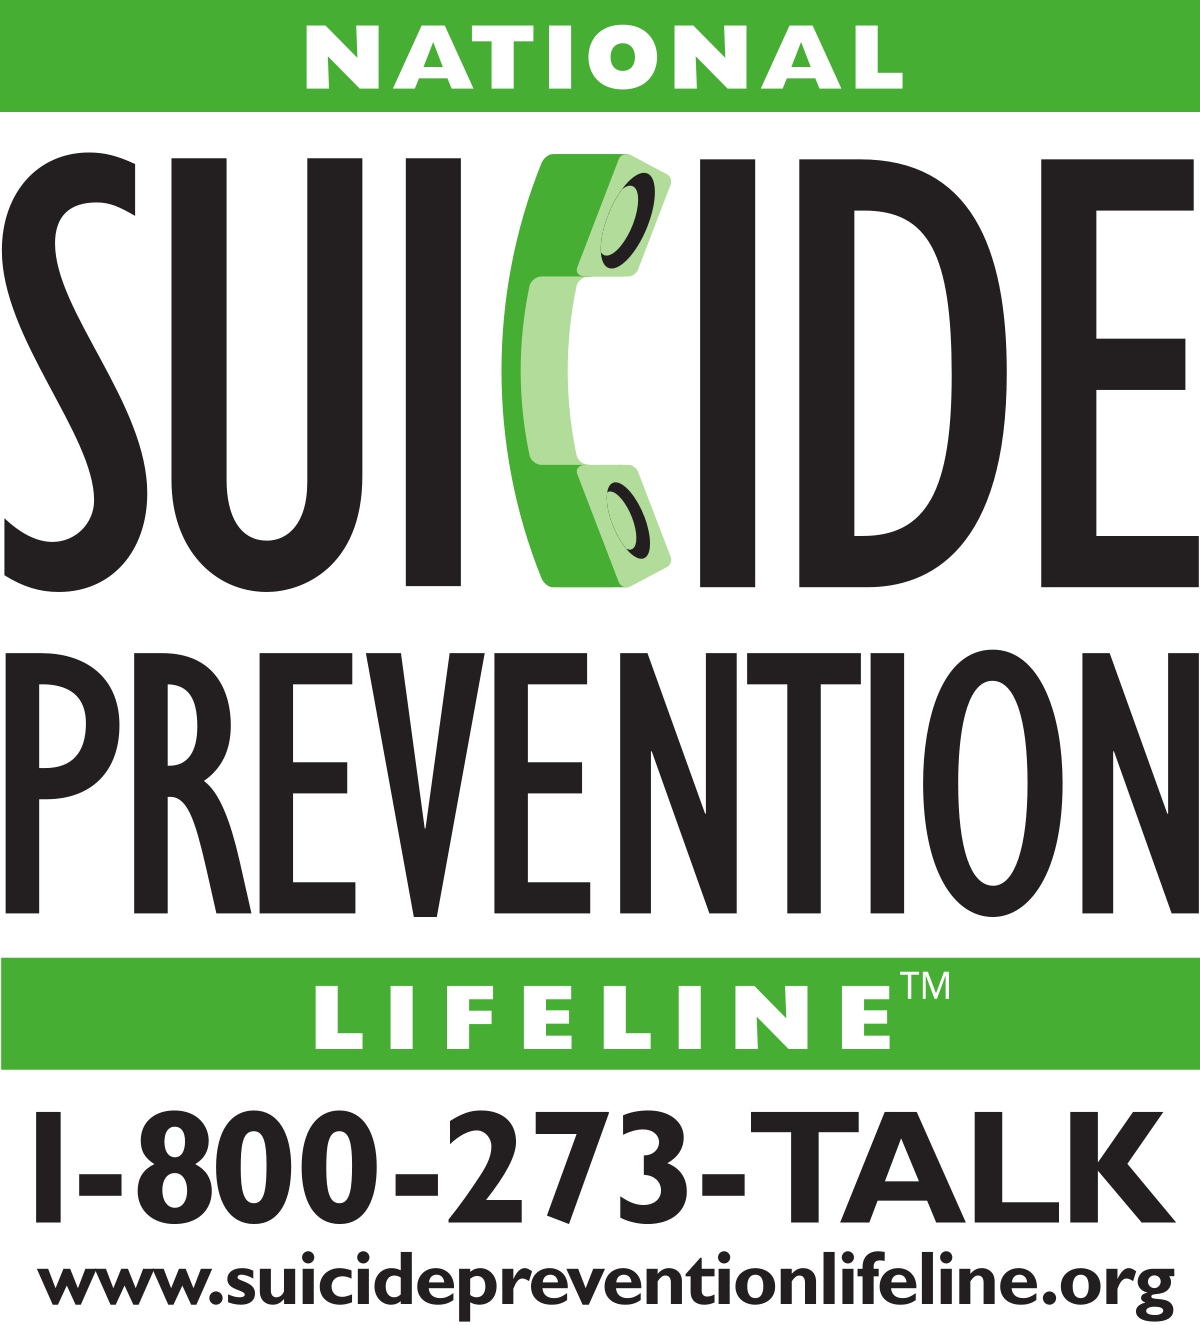 National Suicide Prevention Lifeline - 1-800-273-TALK (8255)